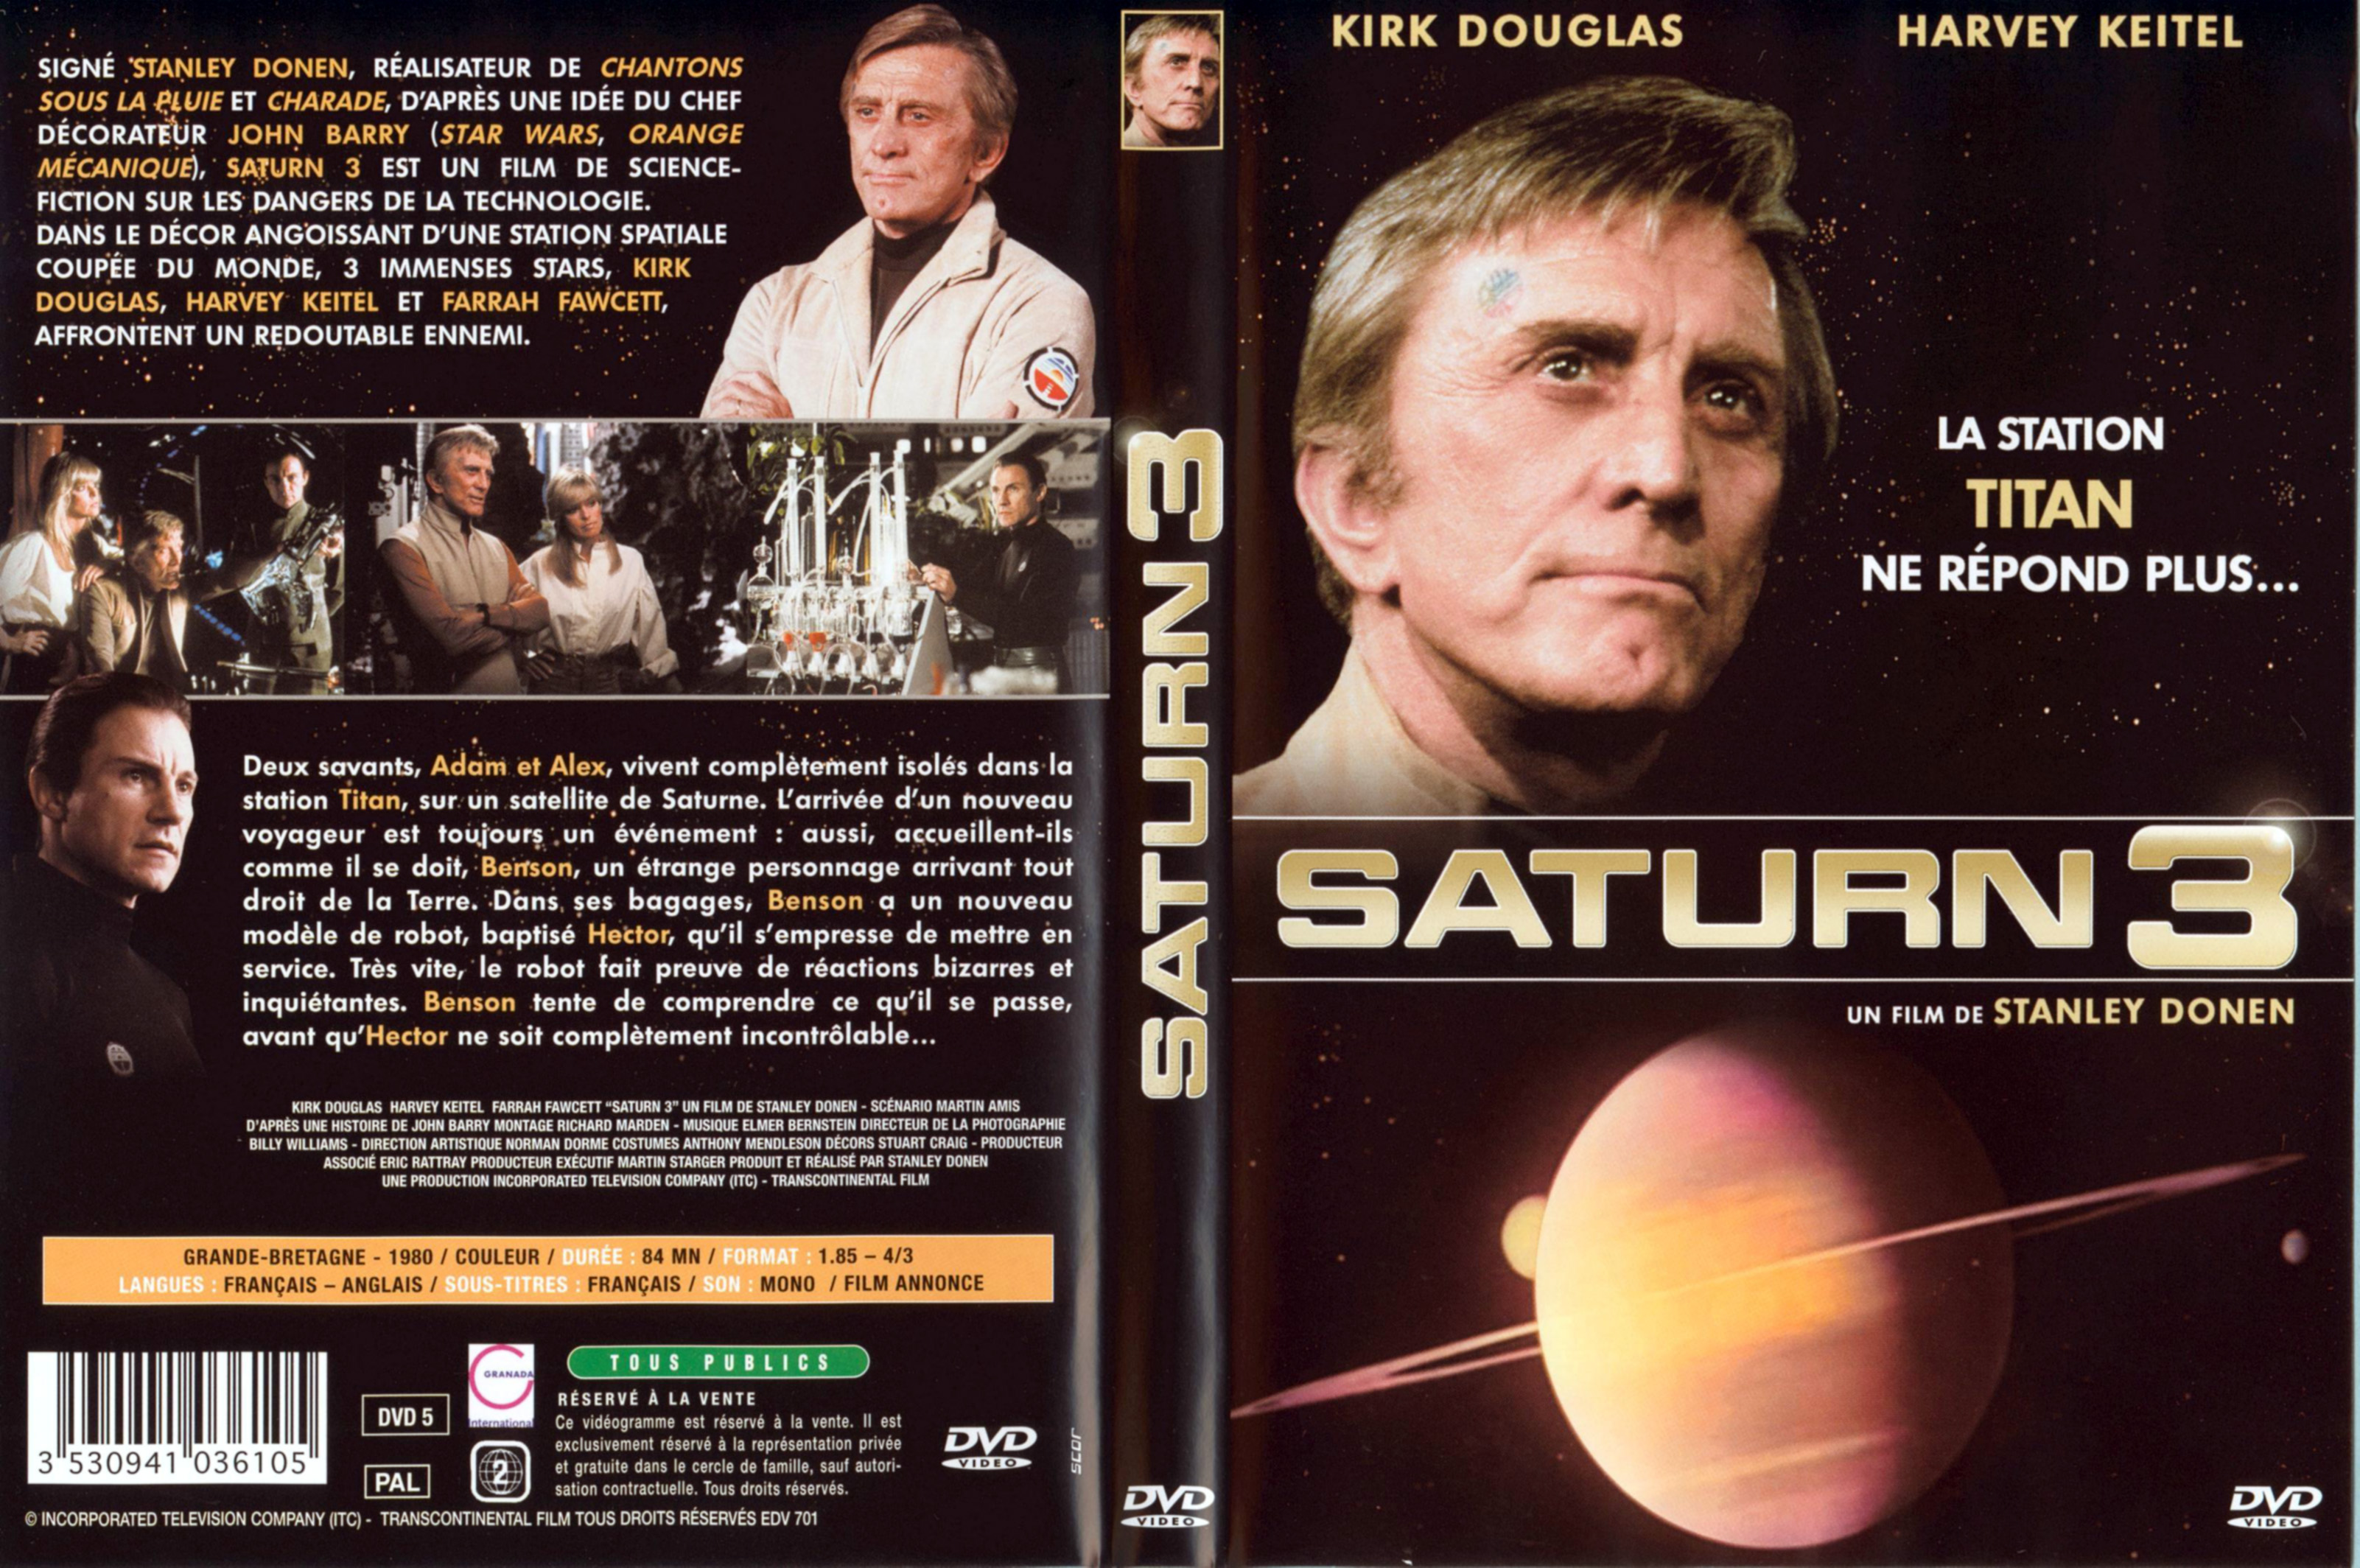 Jaquette DVD Saturn 3